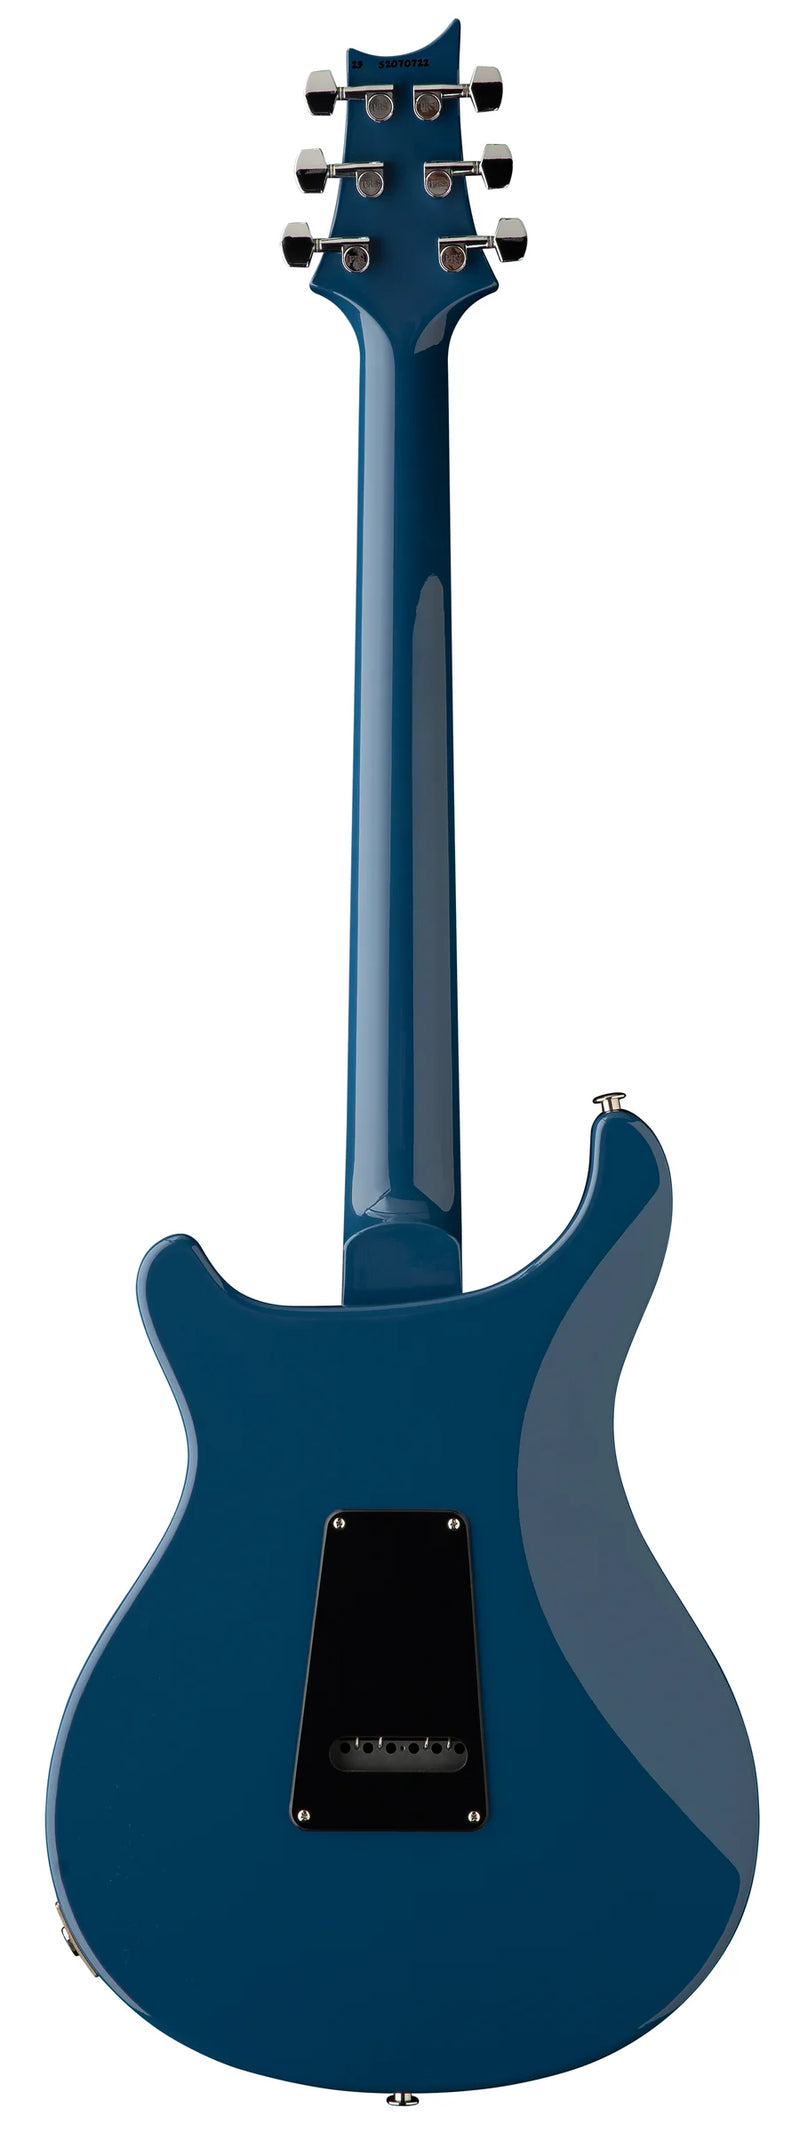 PRS S2 STANDARD 22 Electric Guitar (Space Blue)